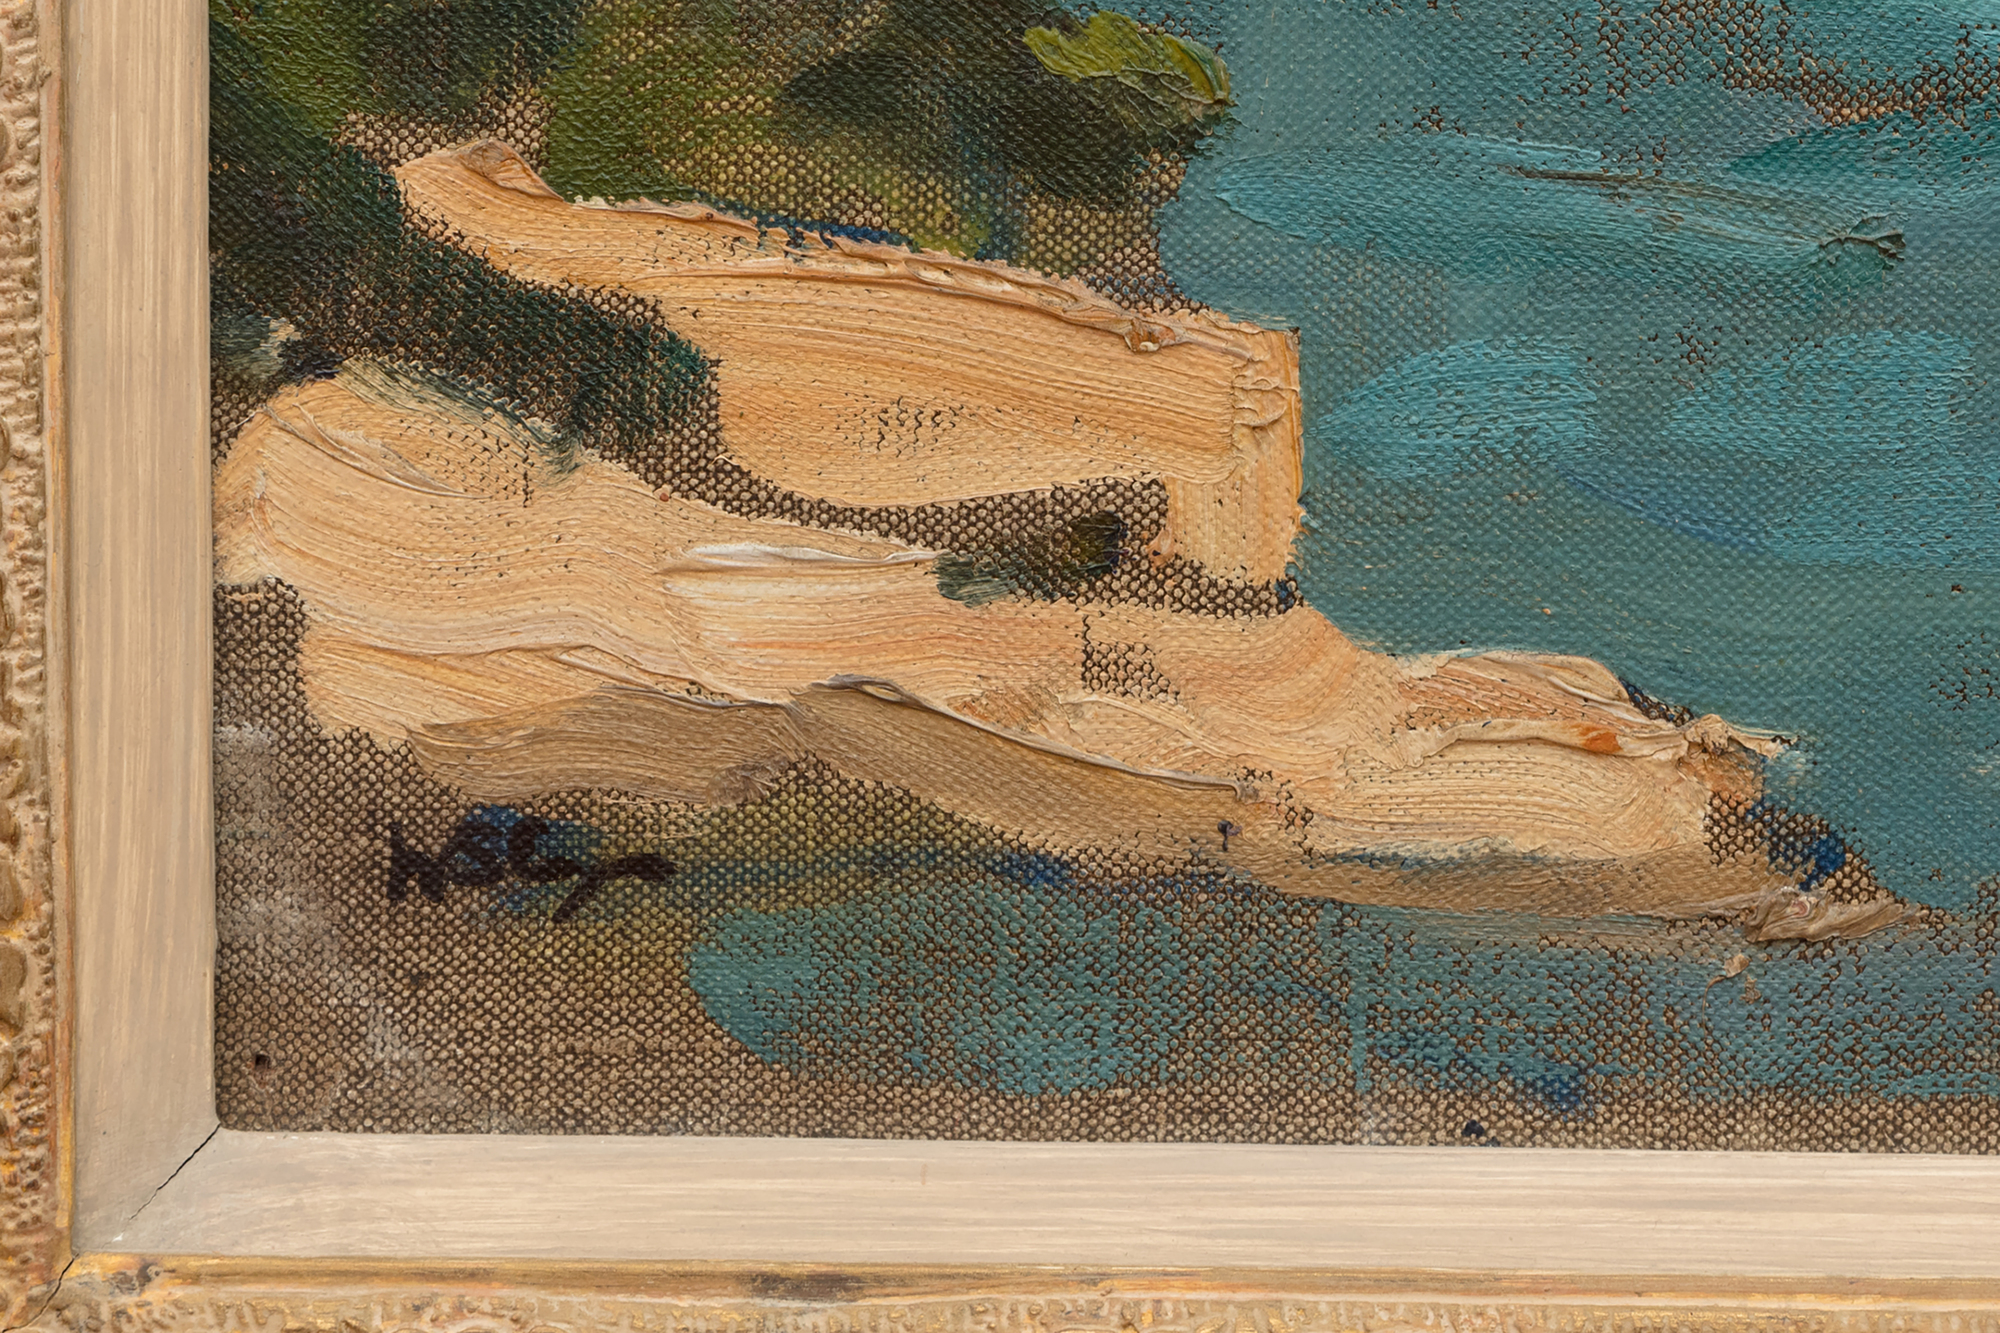 SIR WINSTON CHURCHILL - Vista sobre el puerto de Cassis (C 333) - óleo sobre lienzo - 25 x 30 pulg.